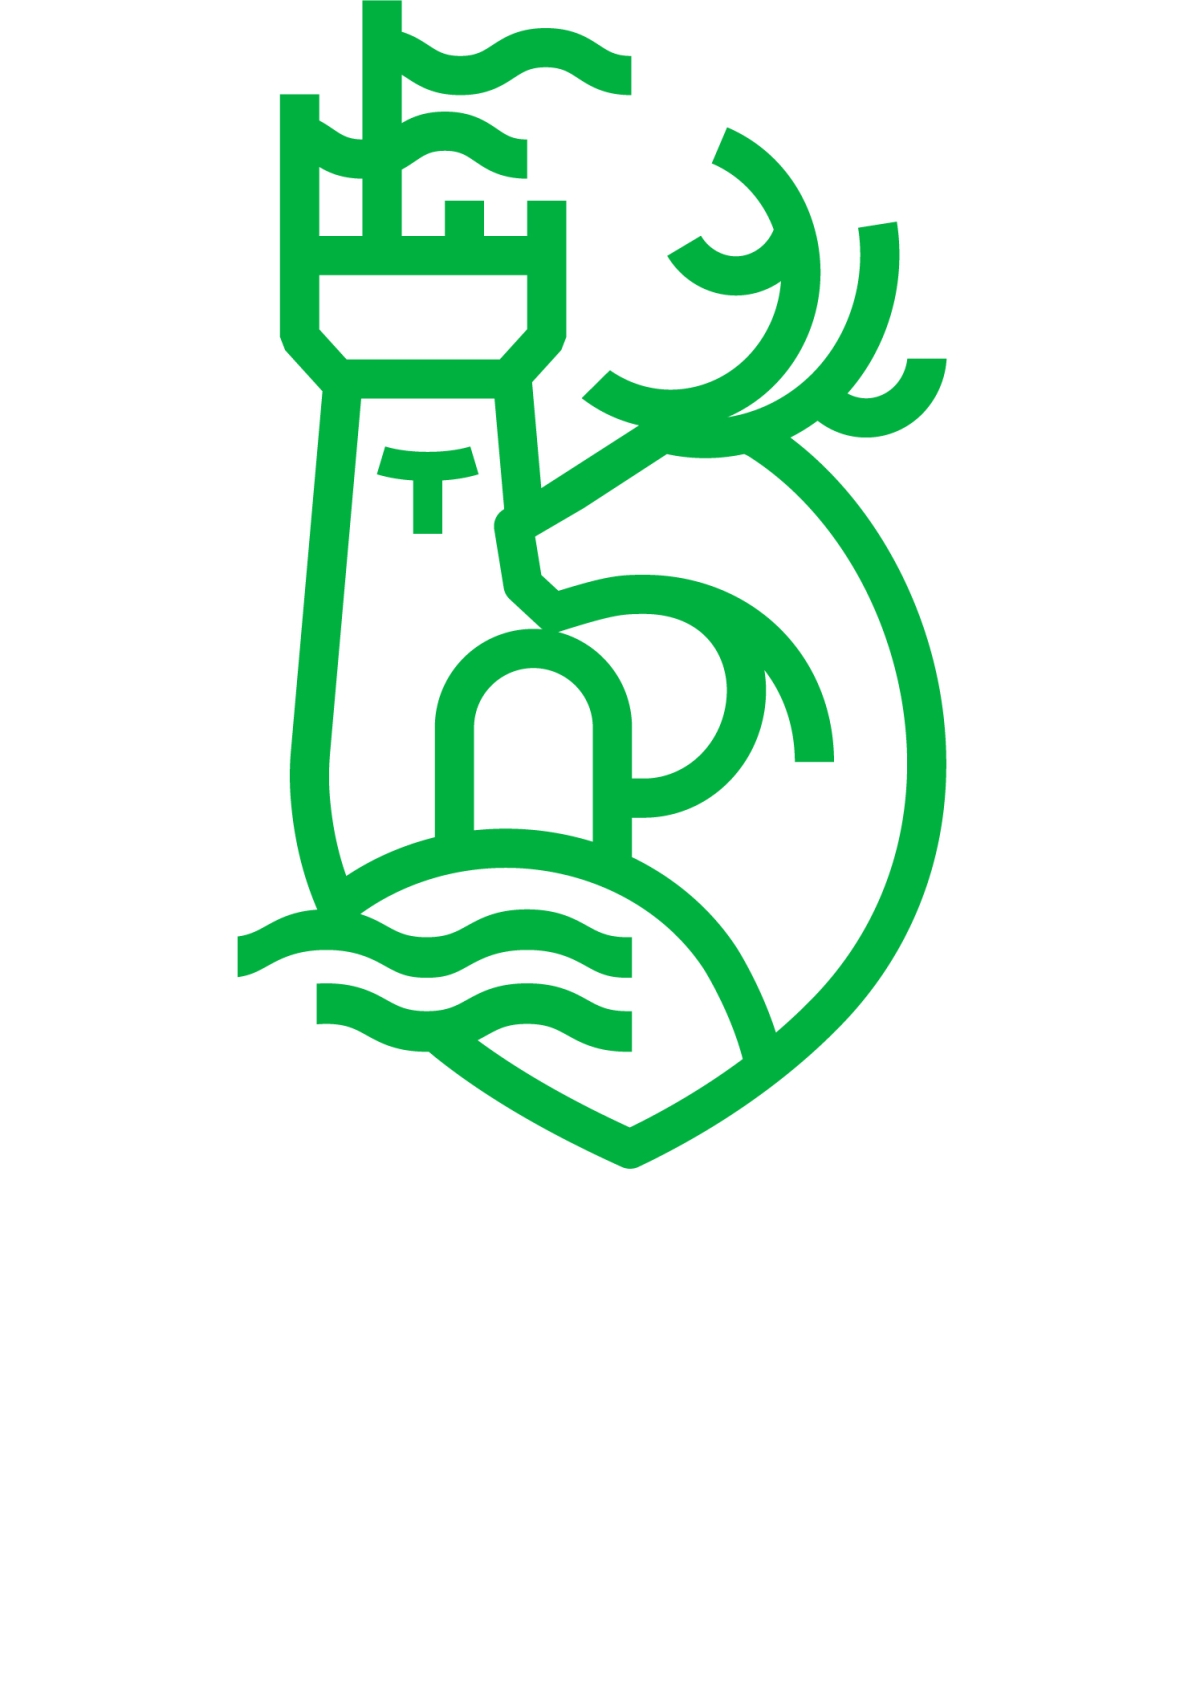 Image shows logo for University of Limerick